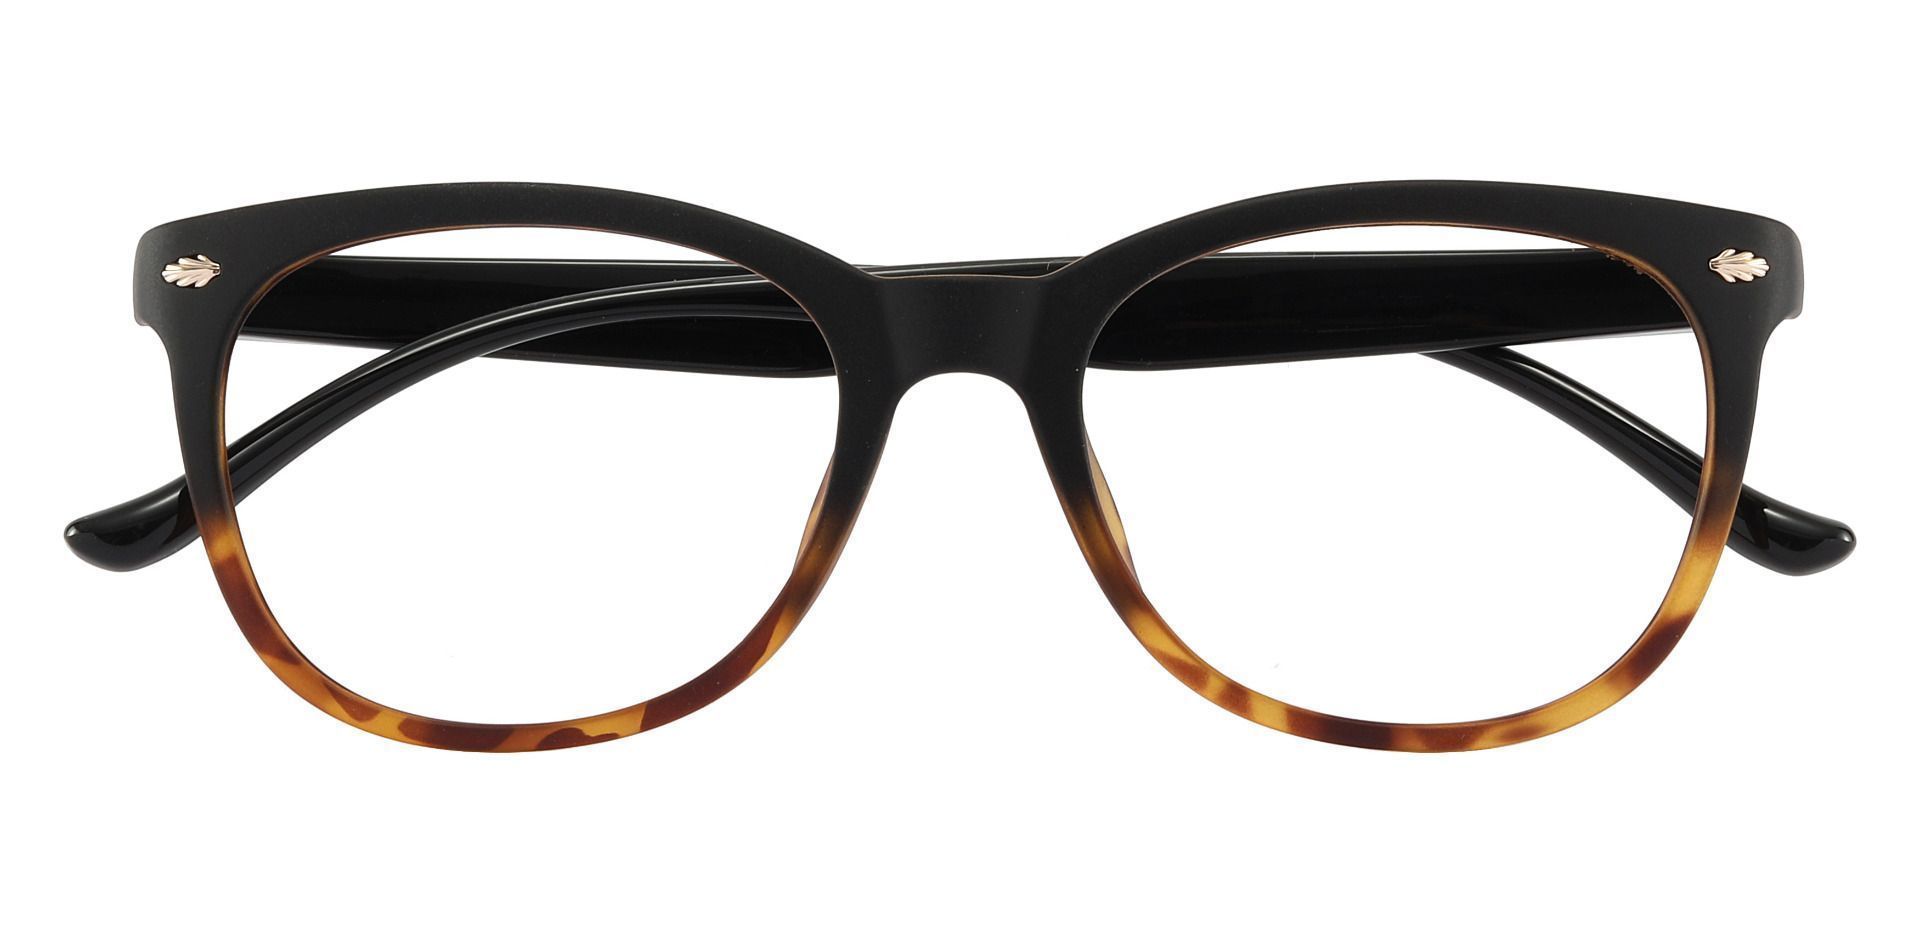 Pavilion Square Eyeglasses Frame - Black